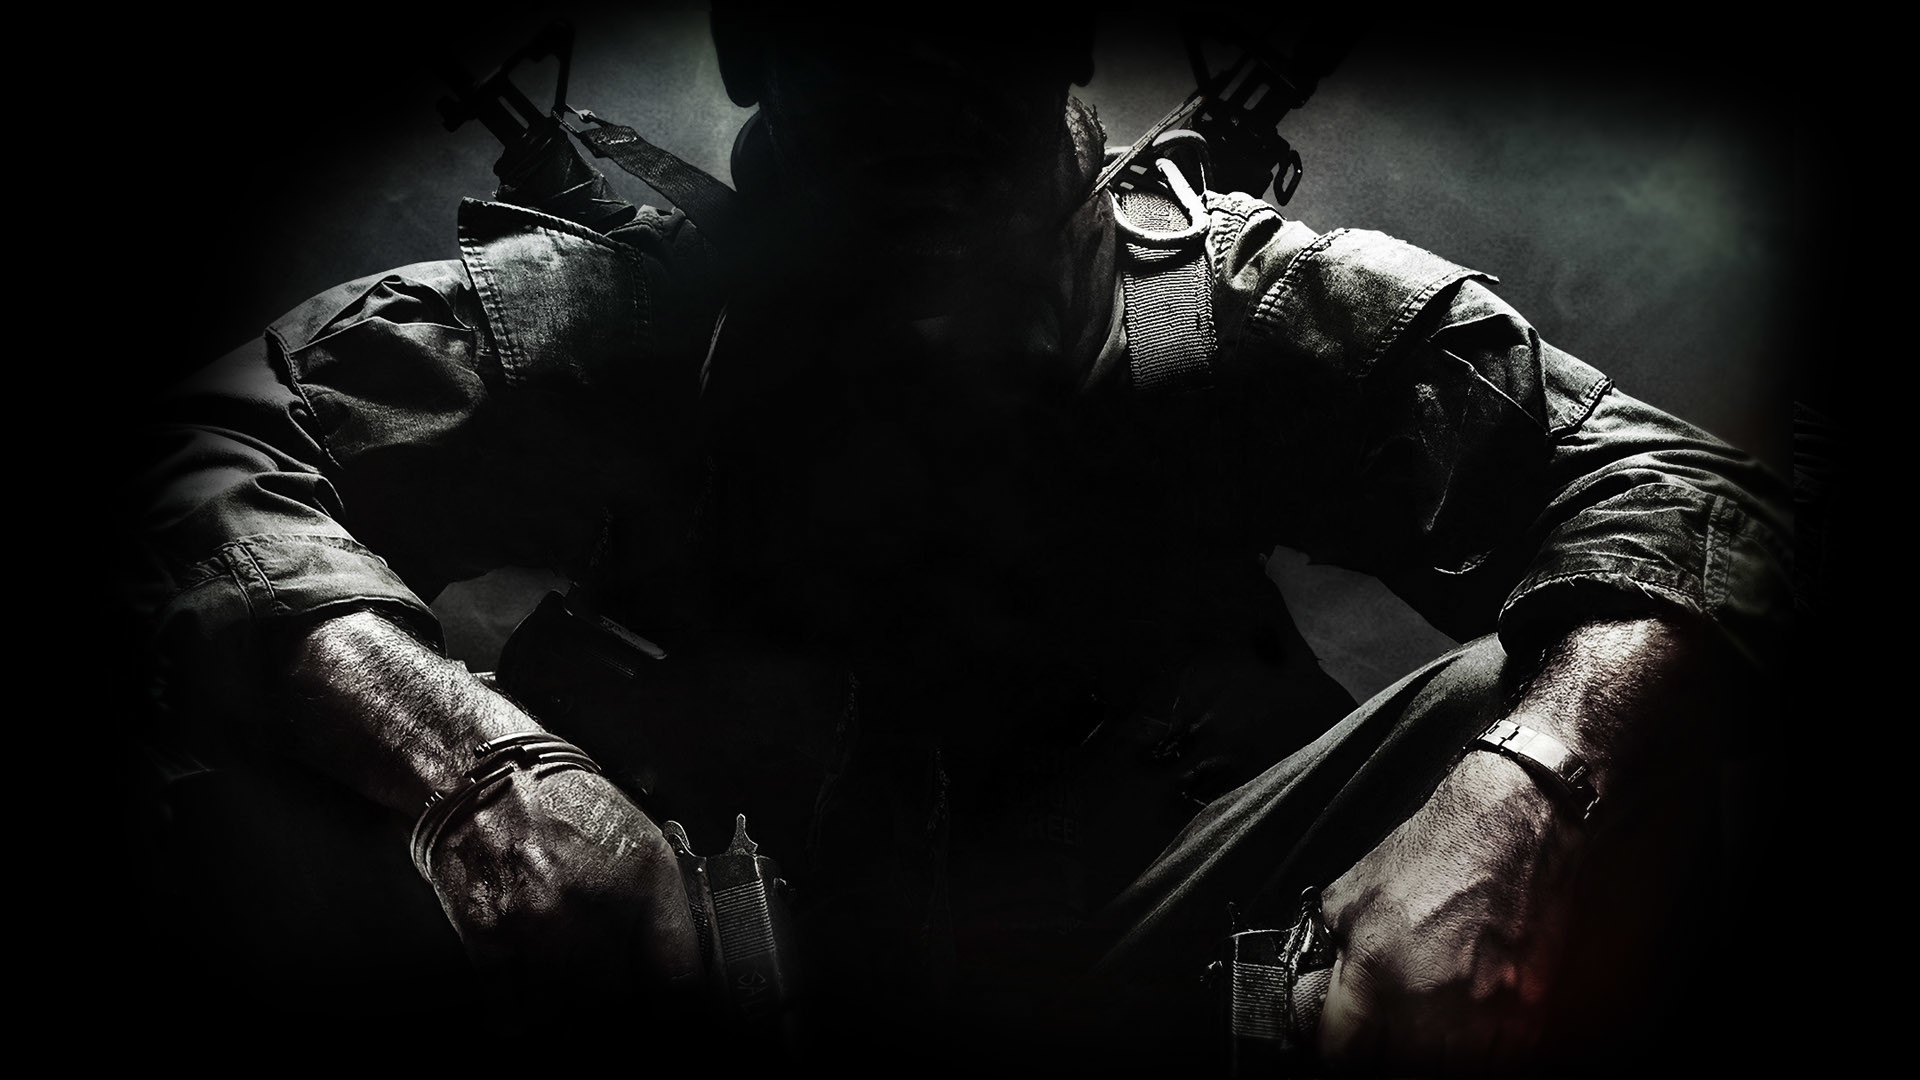 1920x1080 Call of Duty Black Ops 2 Wallpaper (Full HD 1920p) | Download Wallpaper |  Pinterest | Black ops and Wallpaper